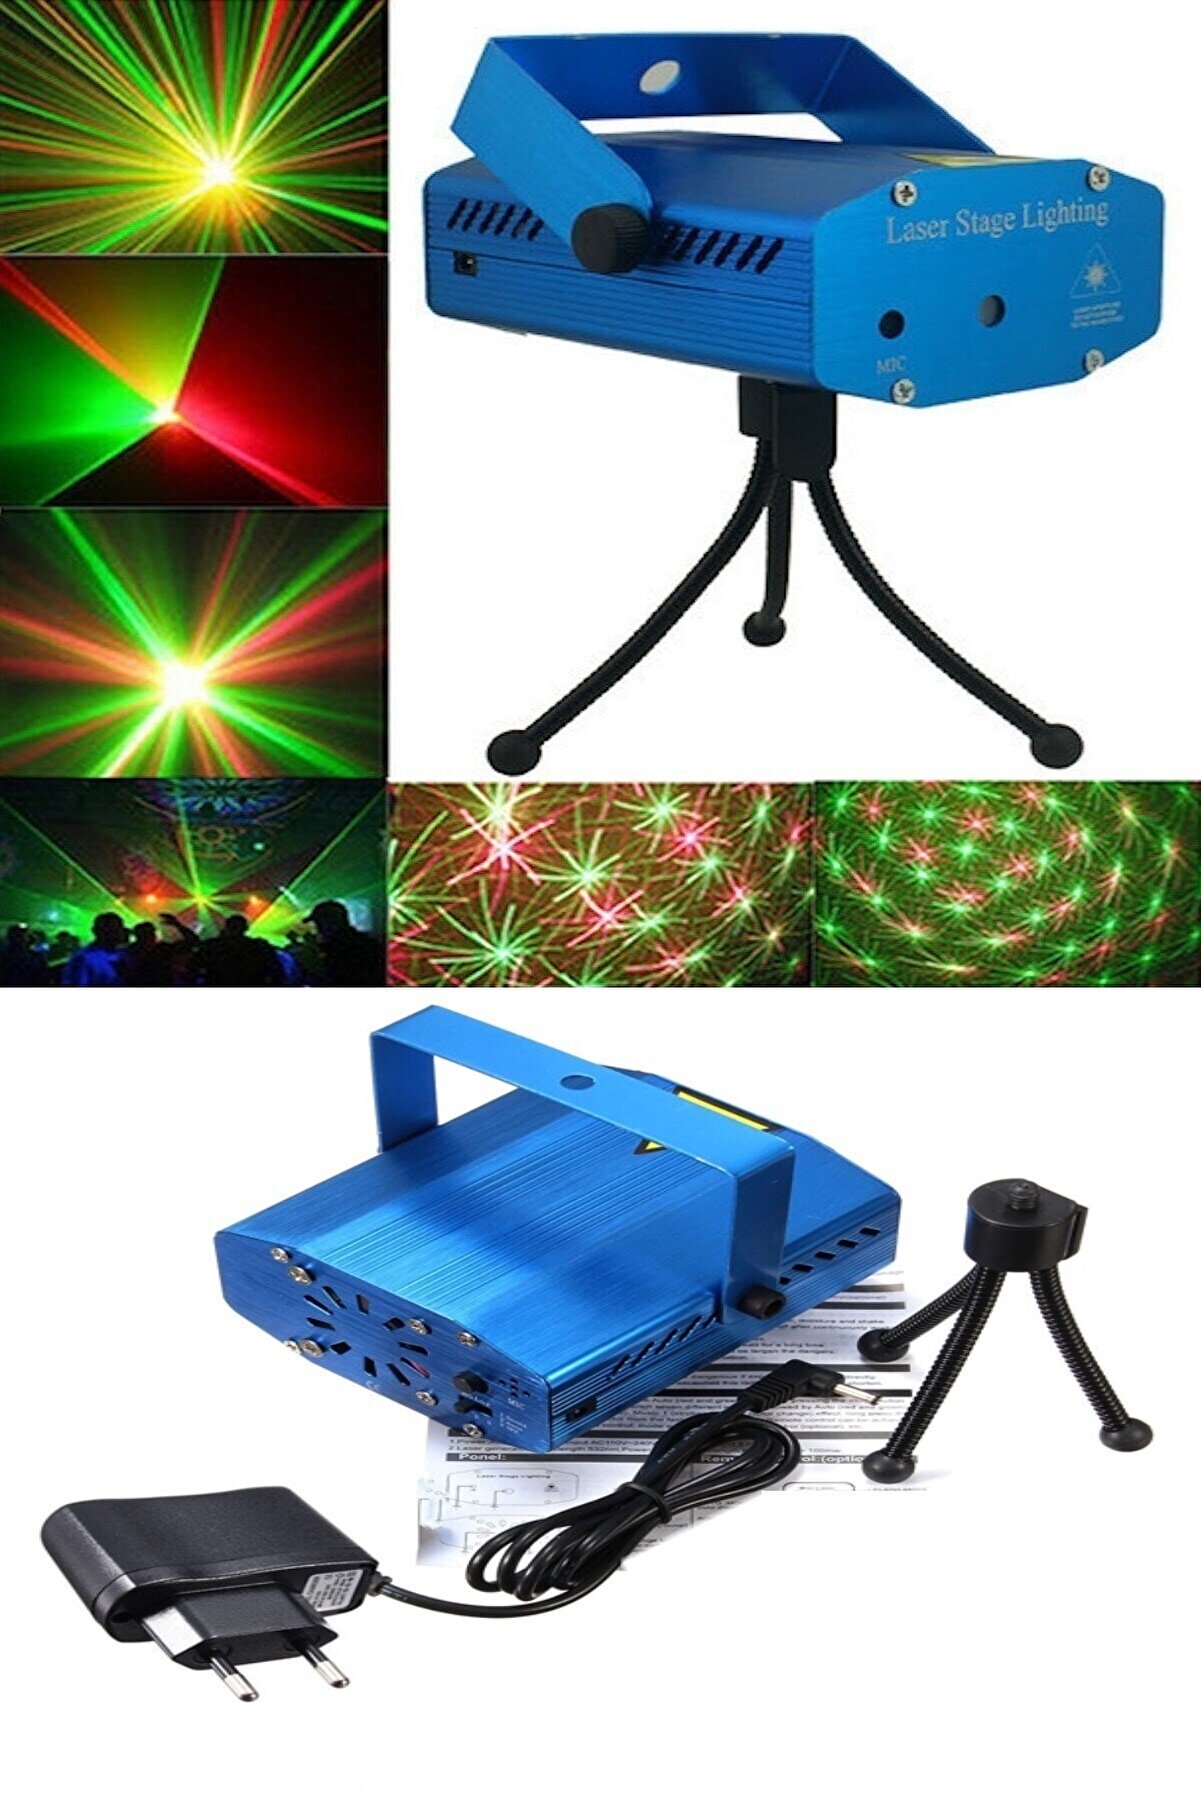 Hyd Mini Laser Stage Lighting Projektör Festival Projeksiyon Aydınlatma Disko Parti Sahne Işığı